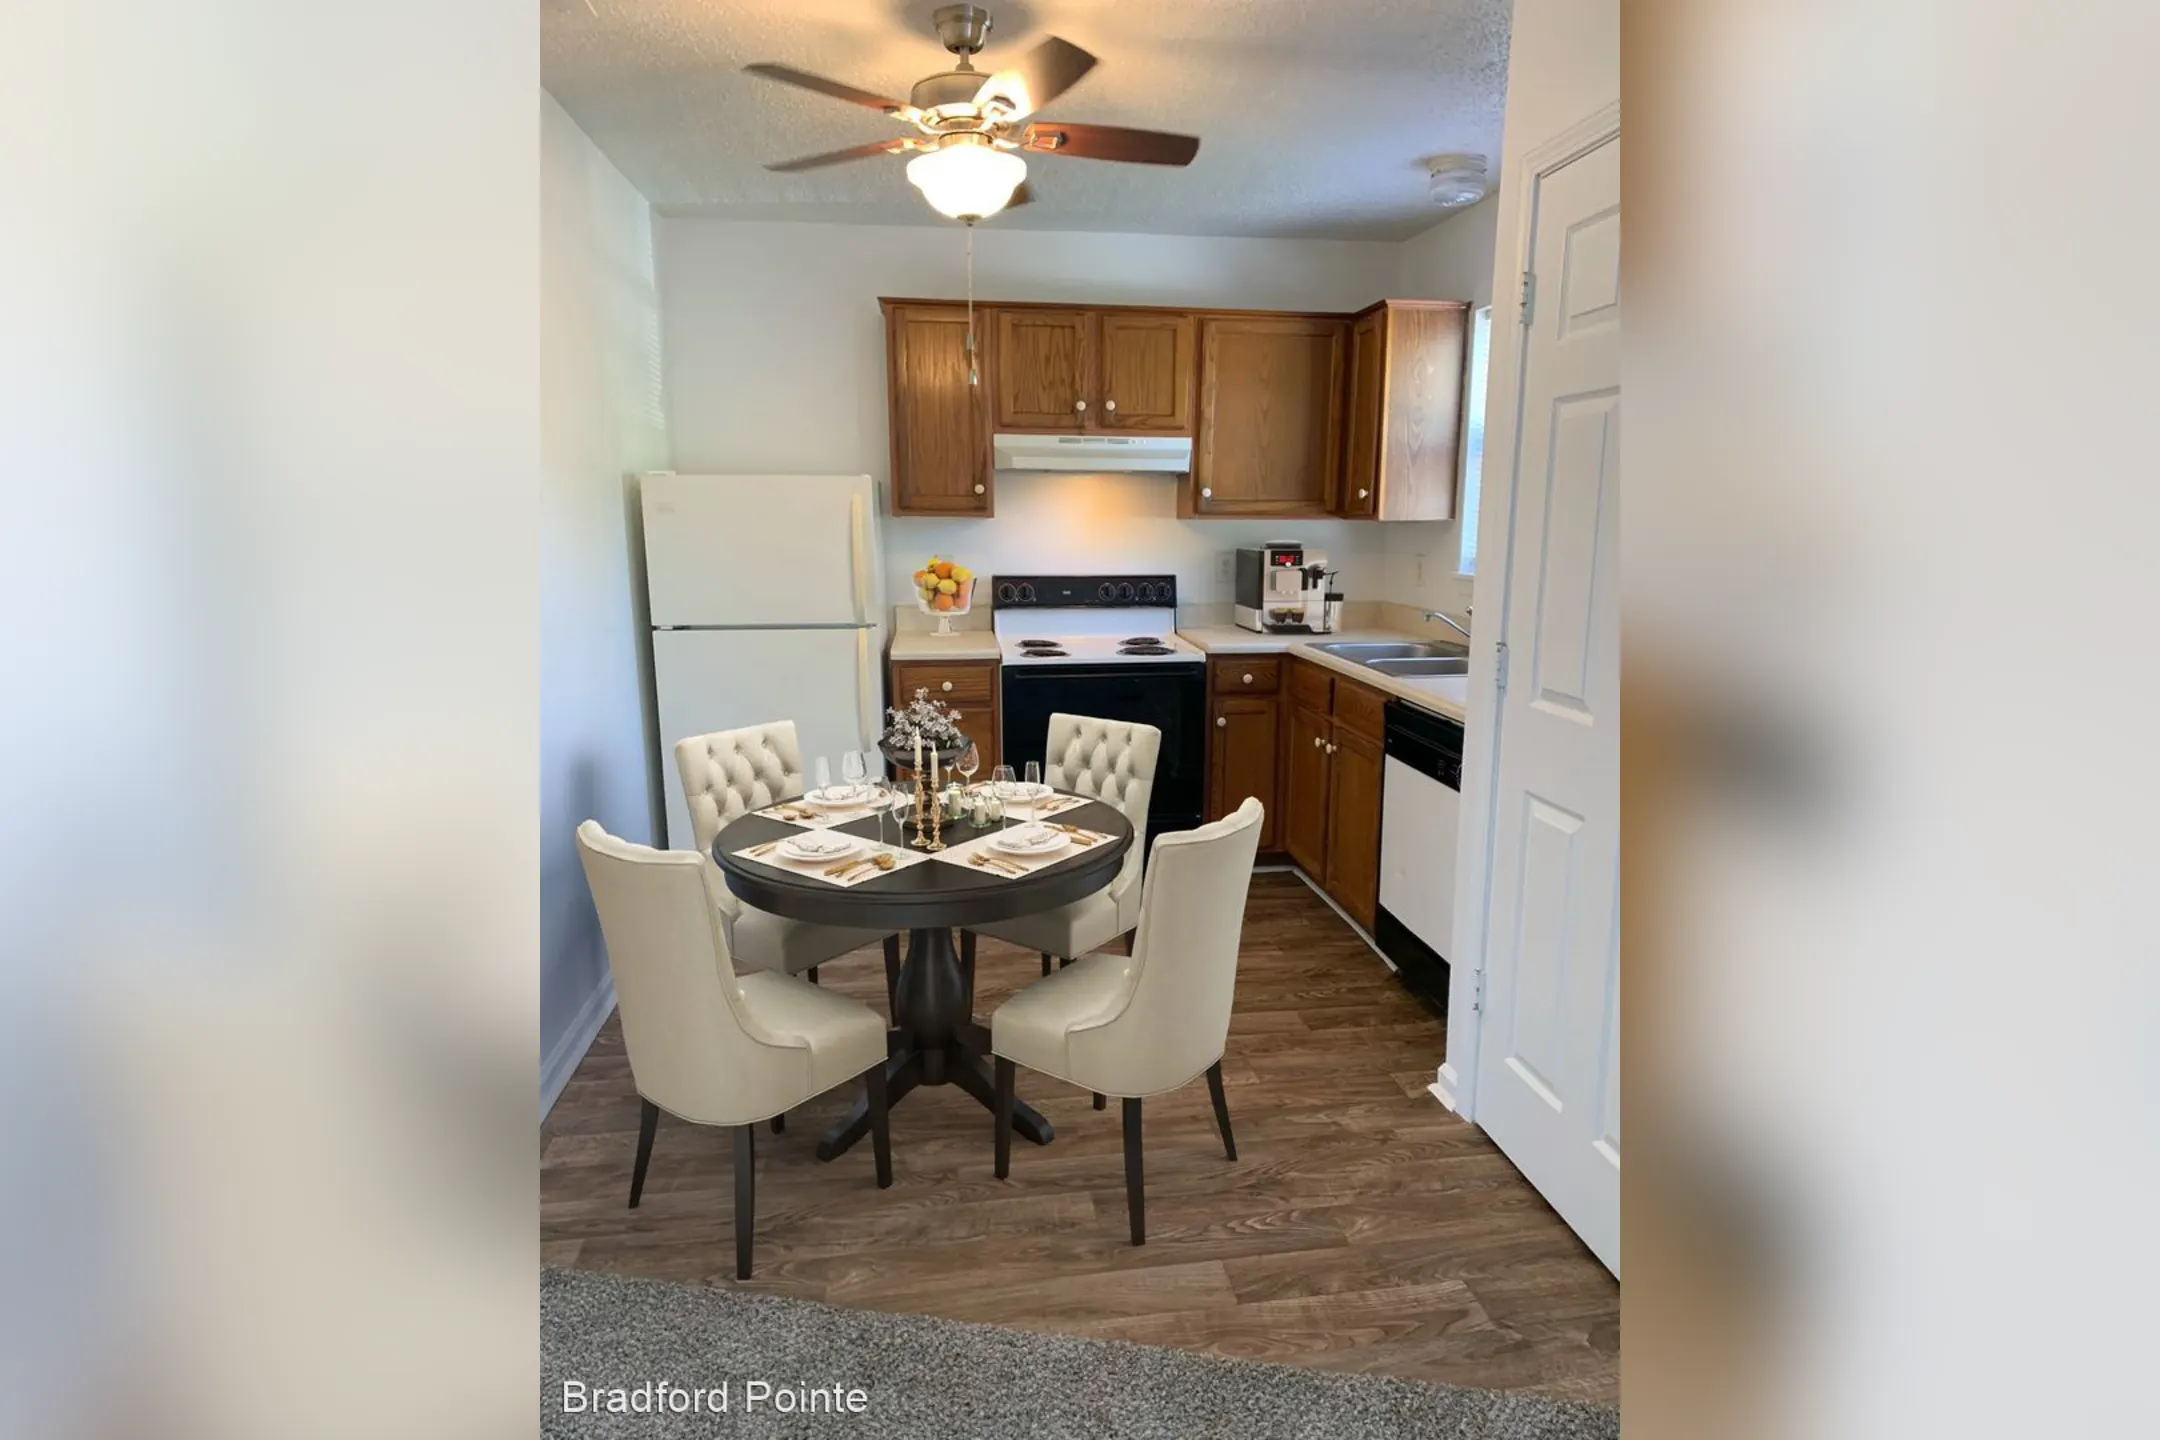 Dining Room - Bradford Pointe Apartments - Evansville, IN